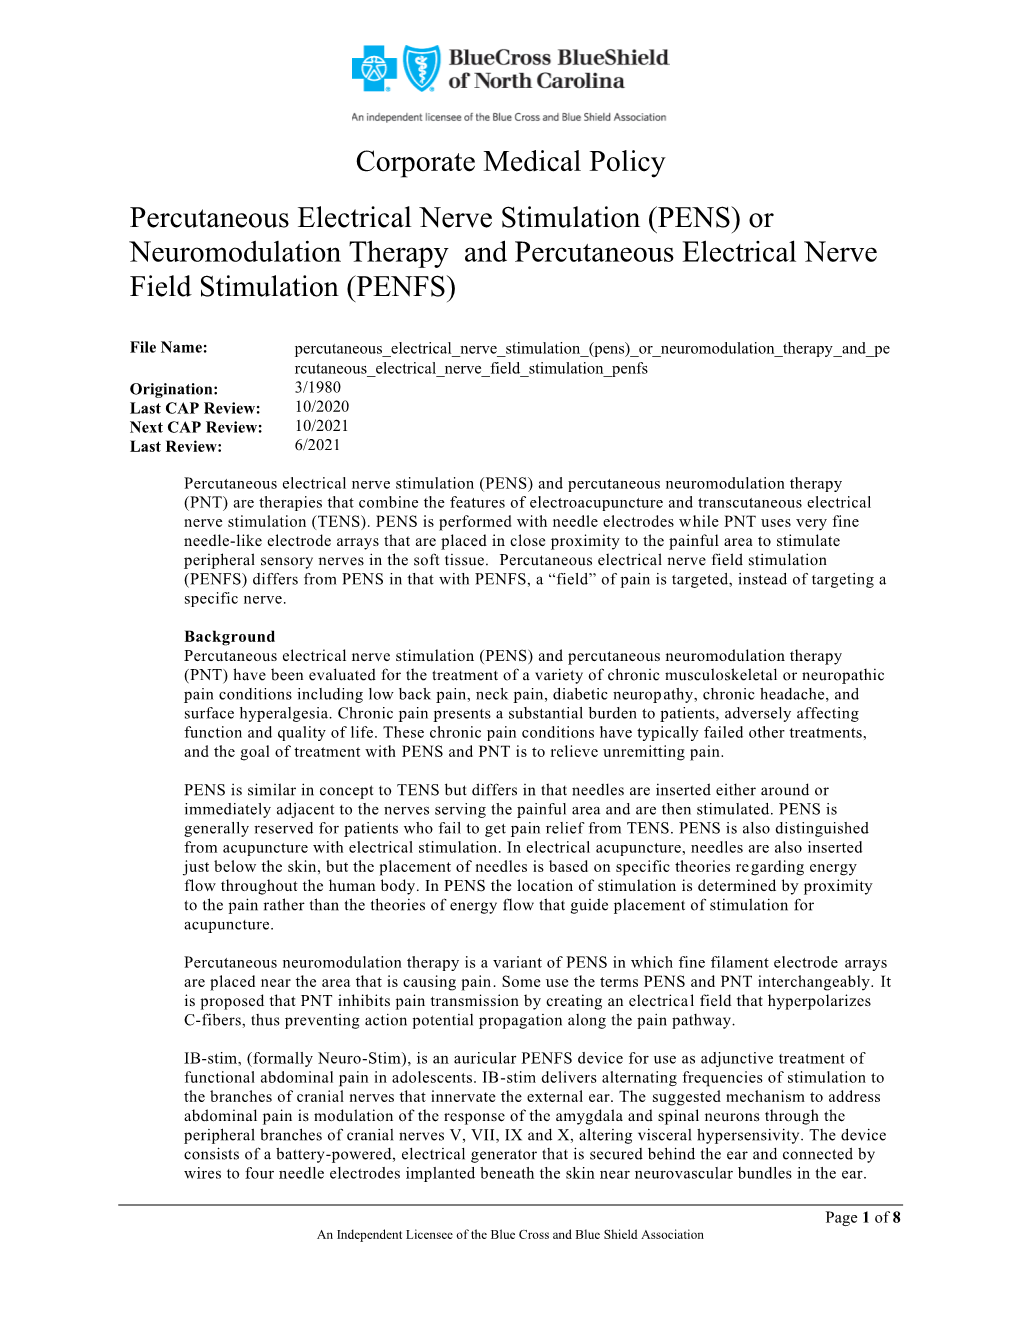 Percutaneous Electrical Nerve Stimulation (PENS) Or Neuromodulation Therapy and Percutaneous Electrical Nerve Field Stimulation (PENFS)